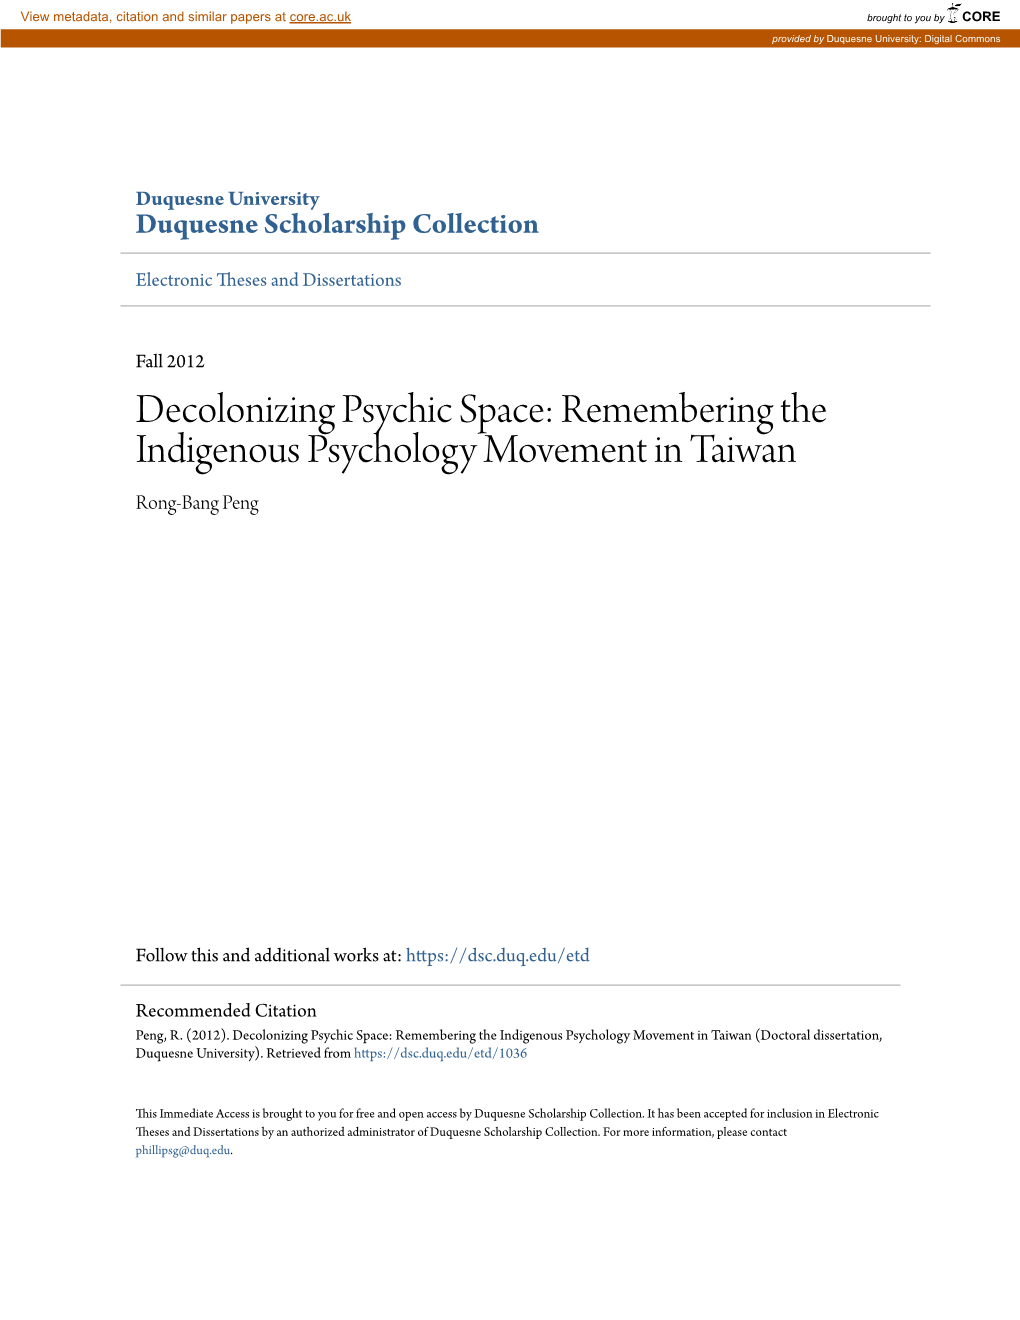 Remembering the Indigenous Psychology Movement in Taiwan Rong-Bang Peng